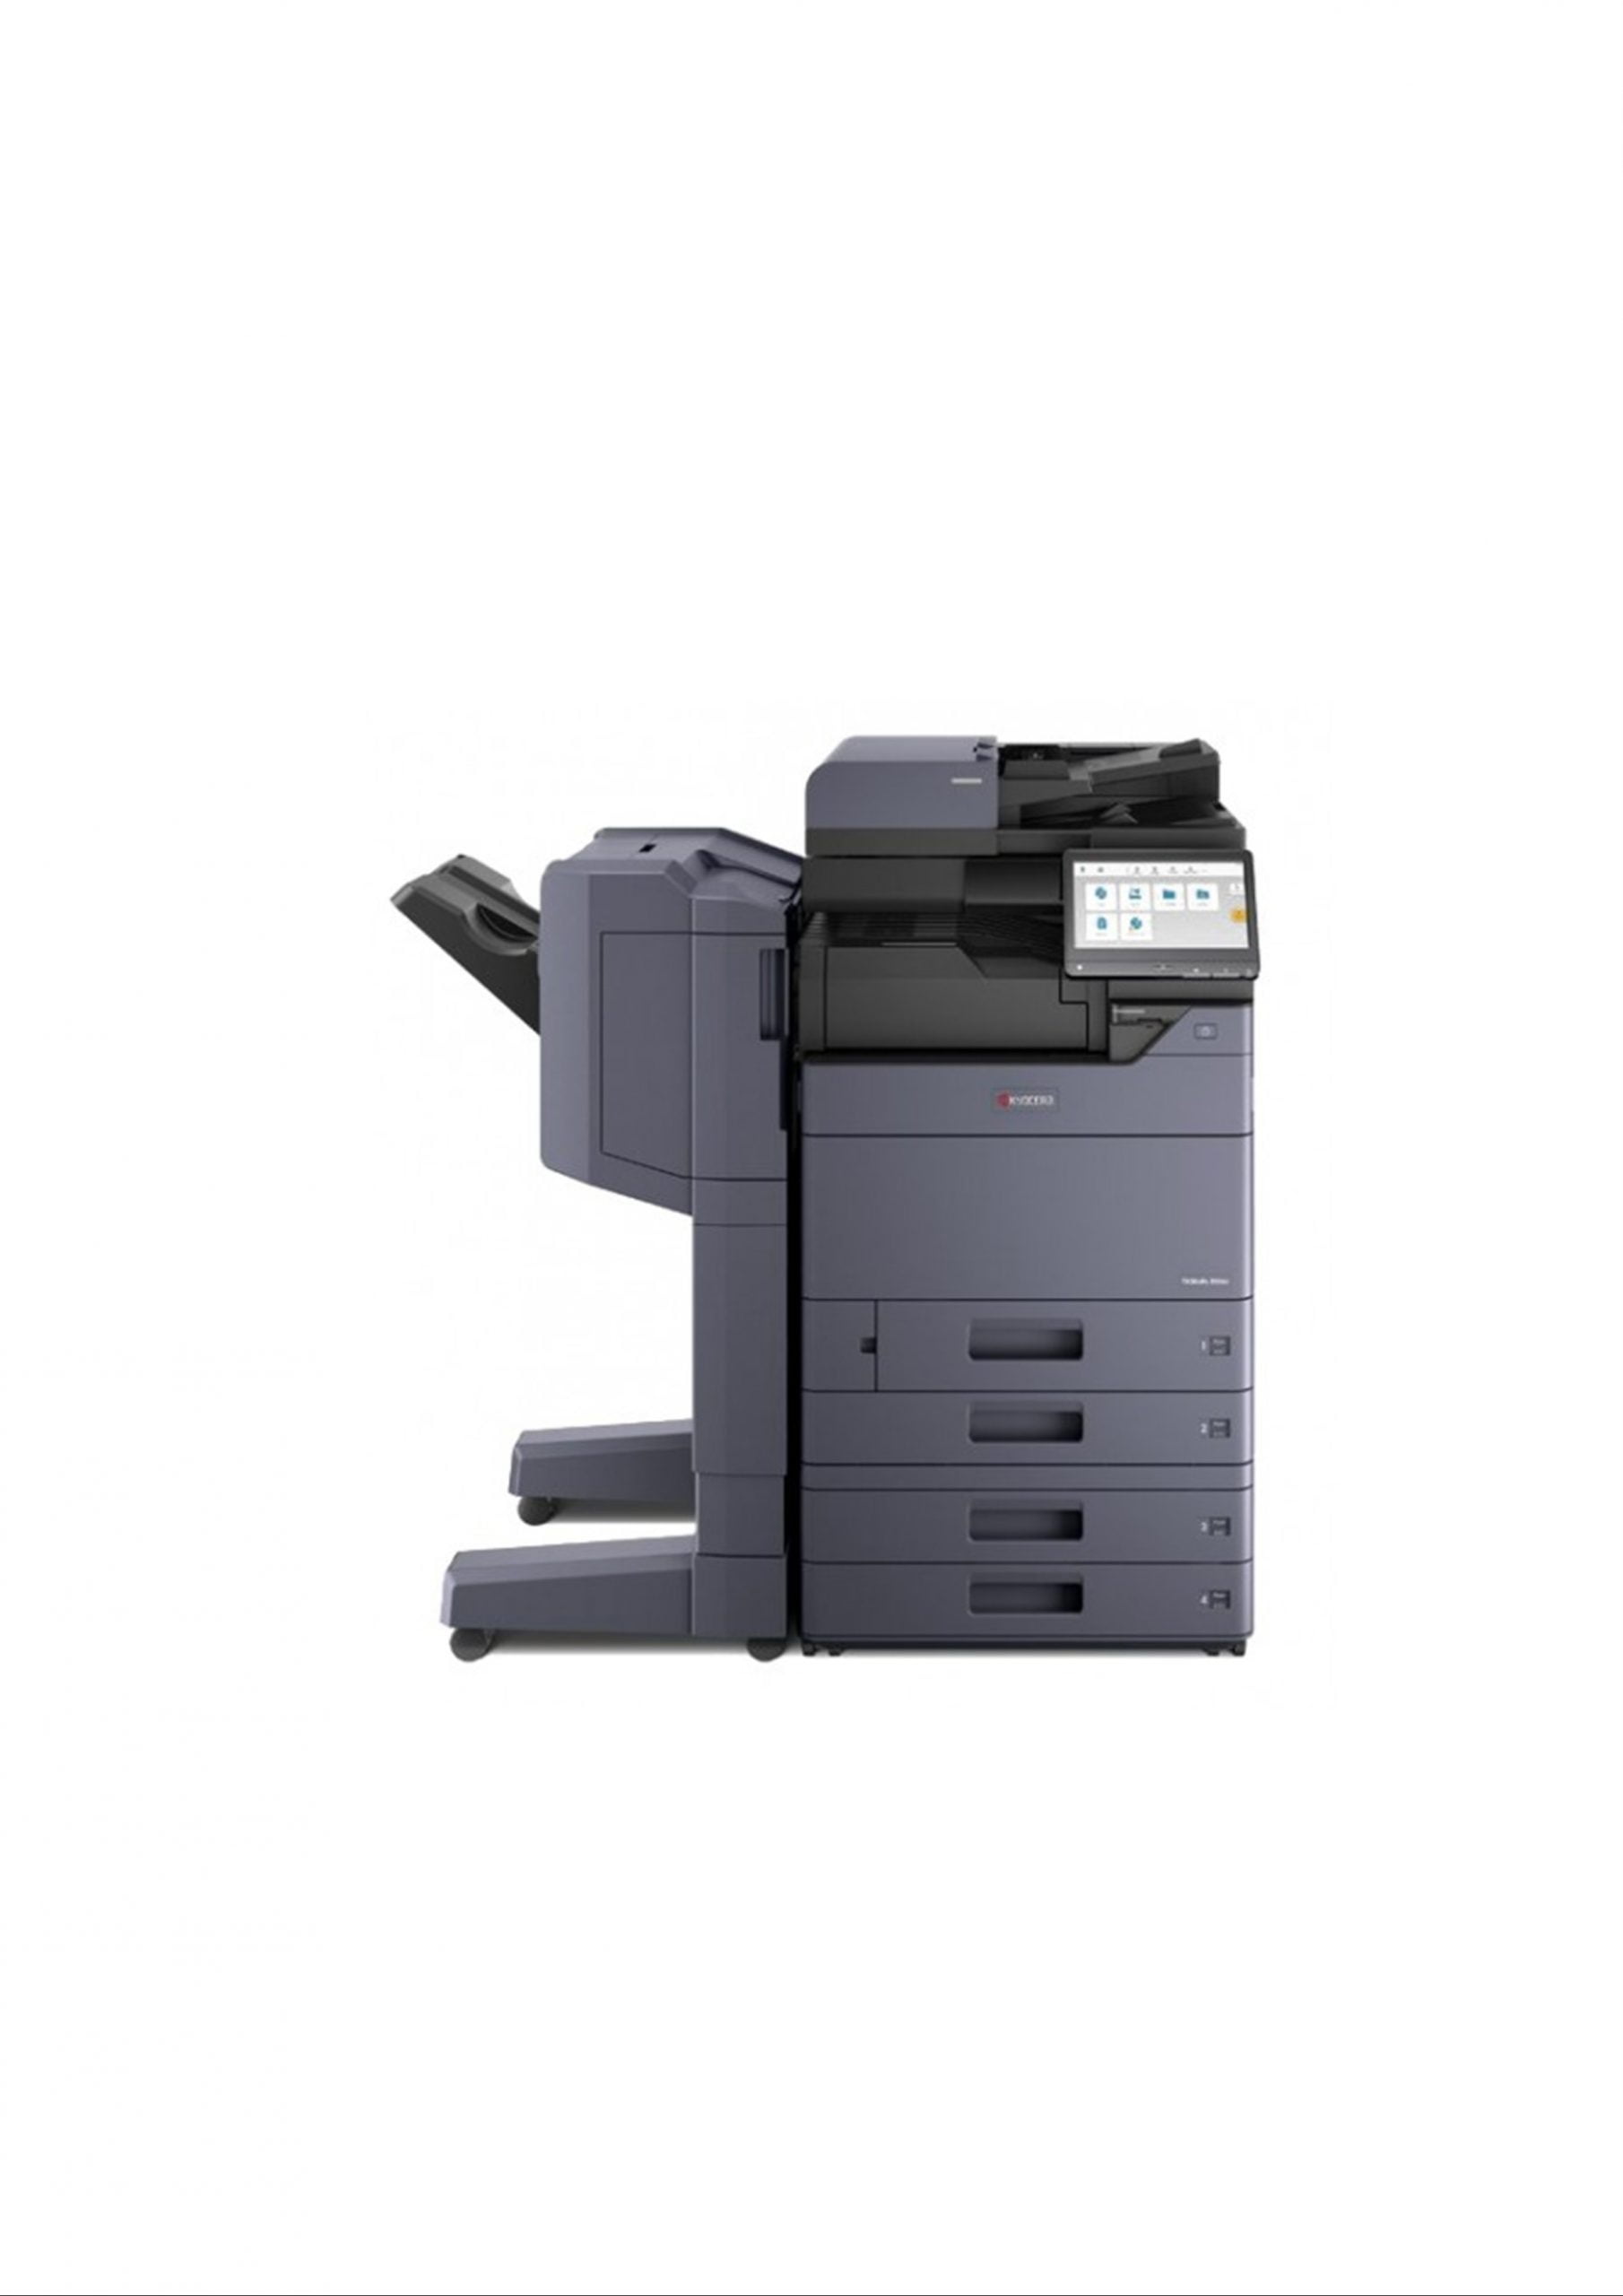 Impressora Multifunções Kyocera Taskalfa 2554ci Laser A3 Cores_02